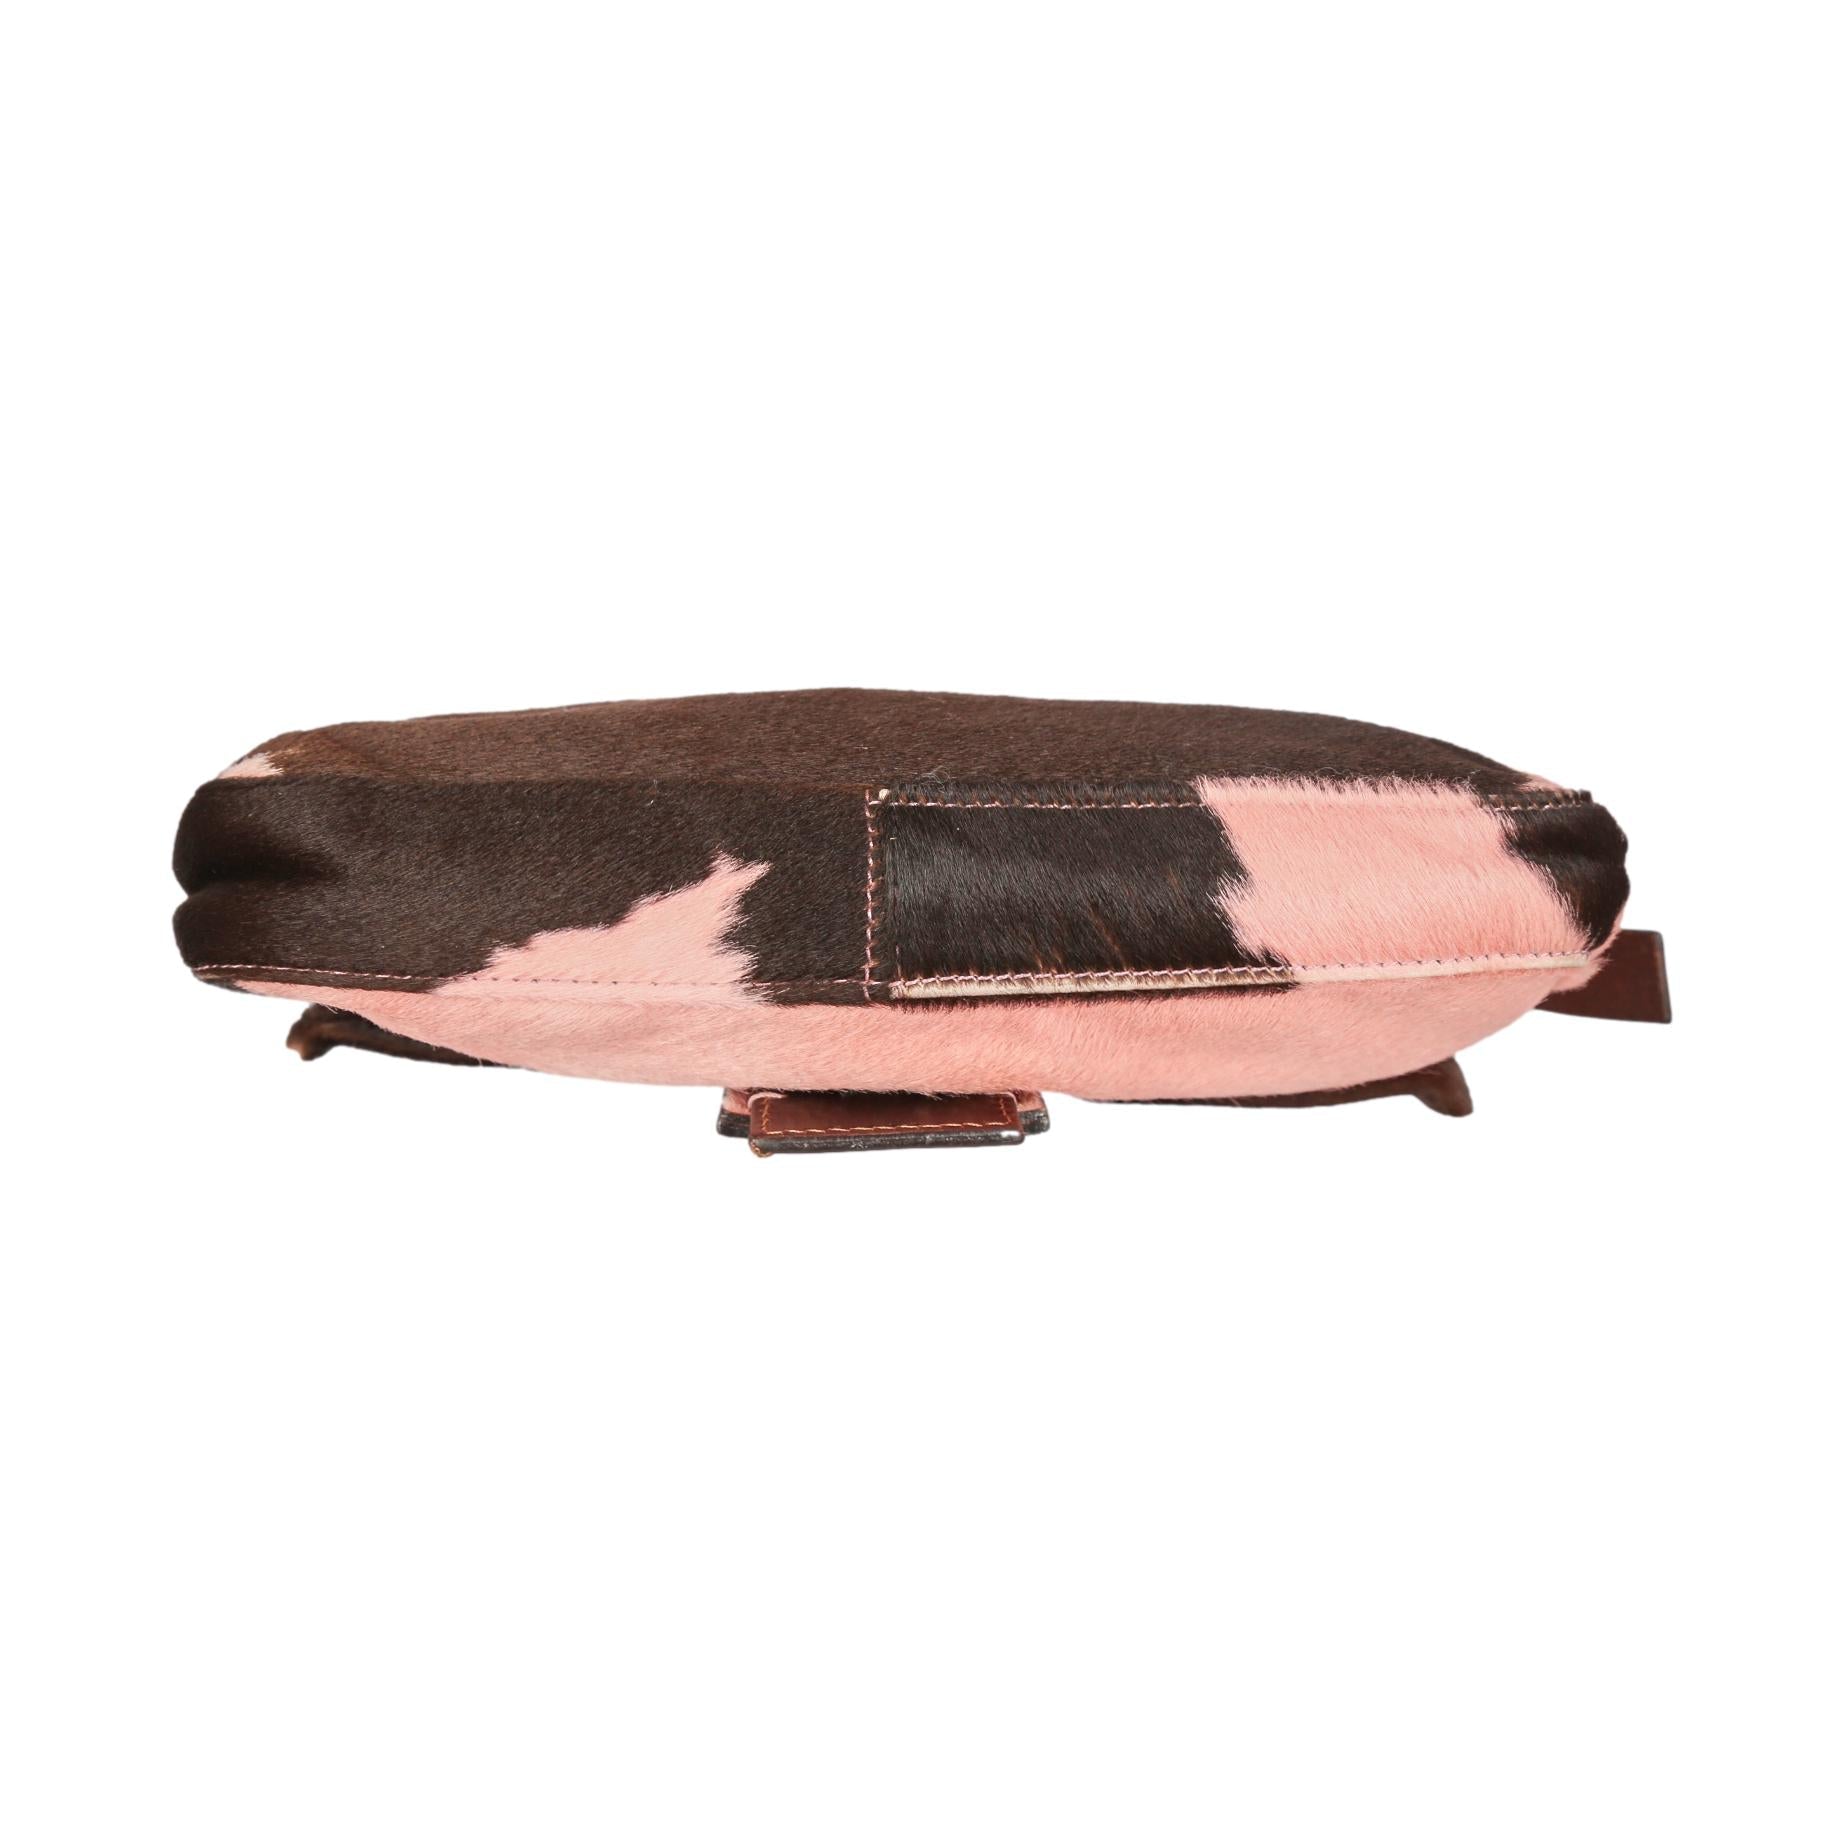 Fendi Pink Cow Print Baguette - Handbags